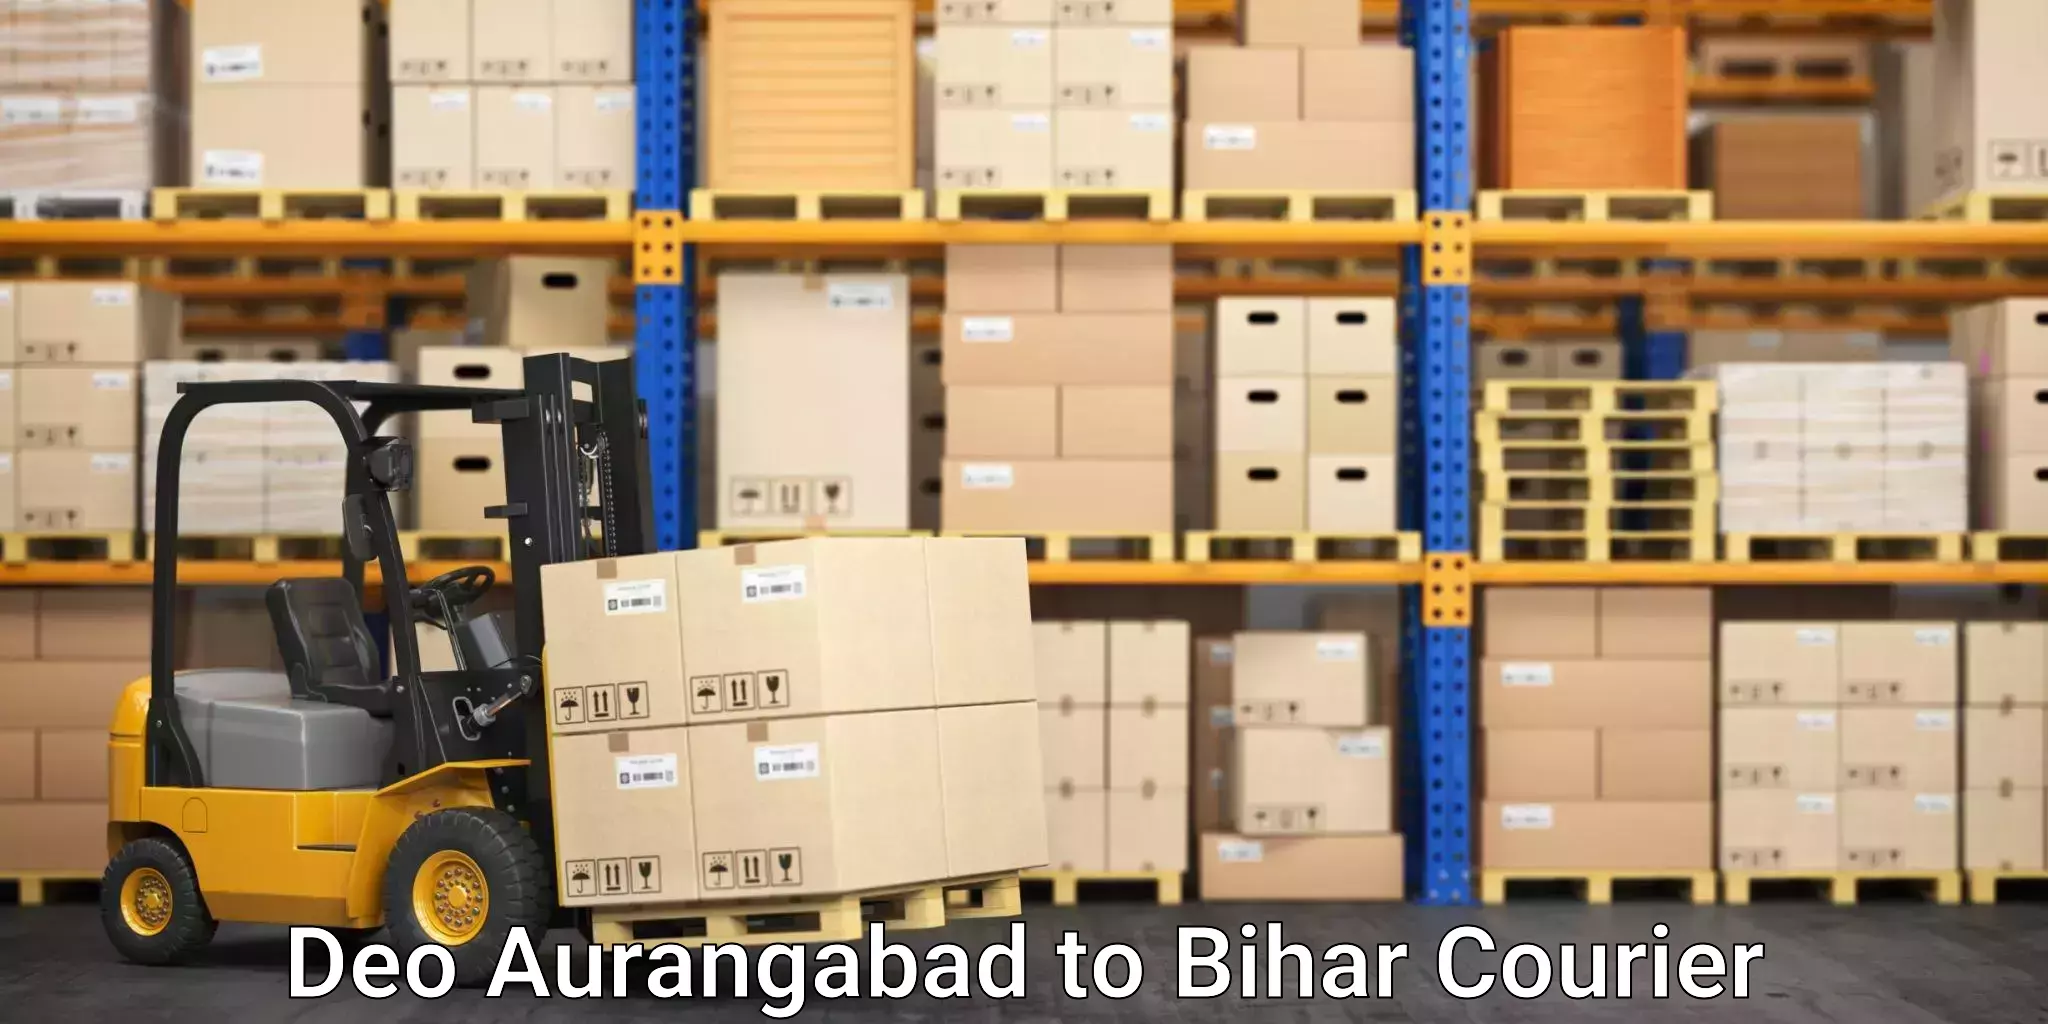 Furniture relocation experts Deo Aurangabad to Bihar